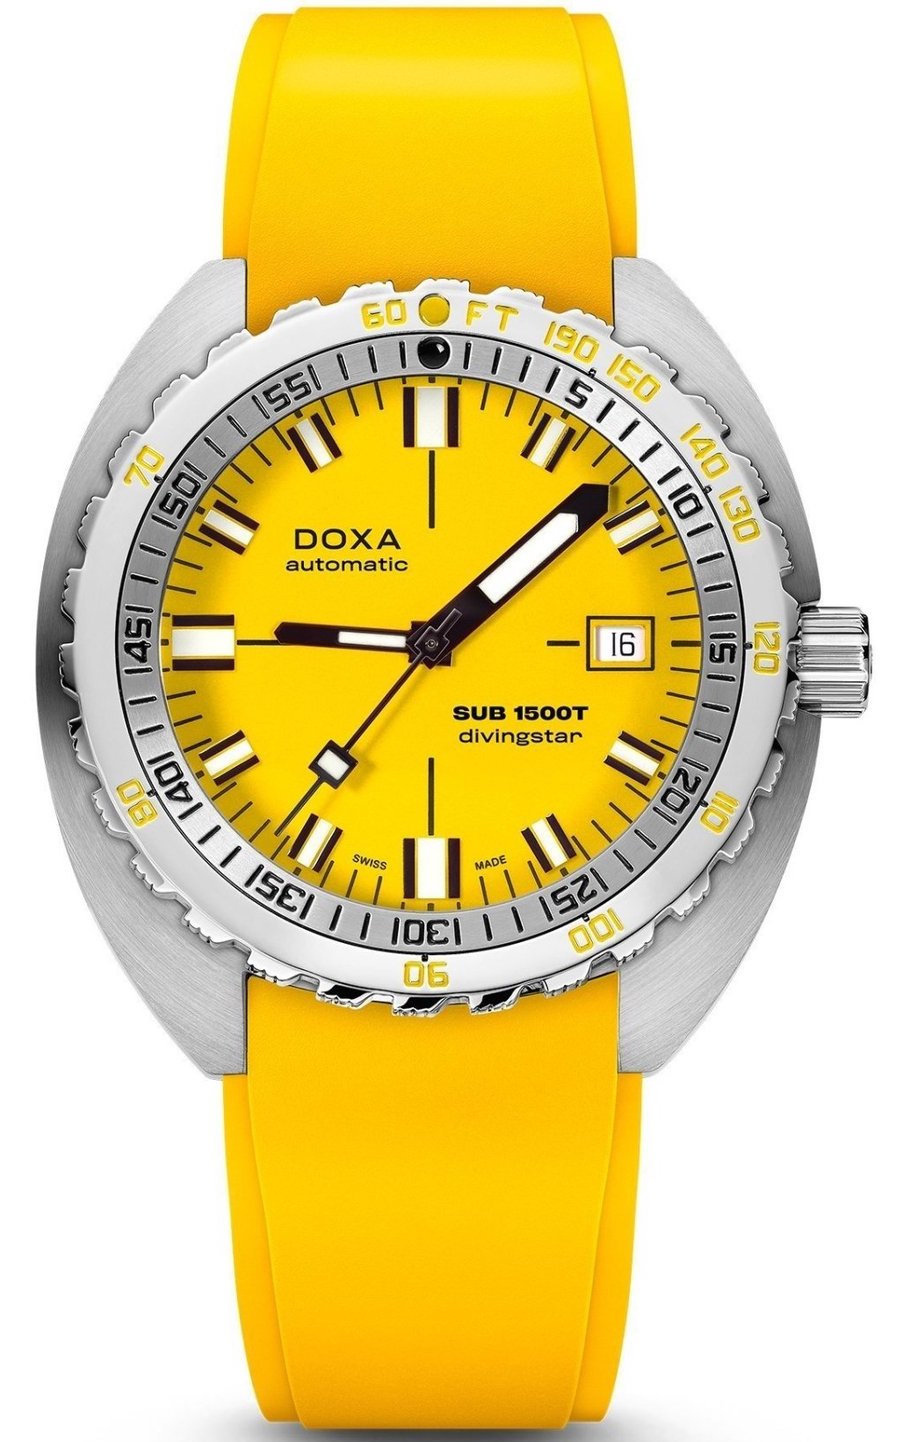 Photos - Wrist Watch DOXA Watch SUB 1500T Divingstar Rubber - Yellow DOX-065 